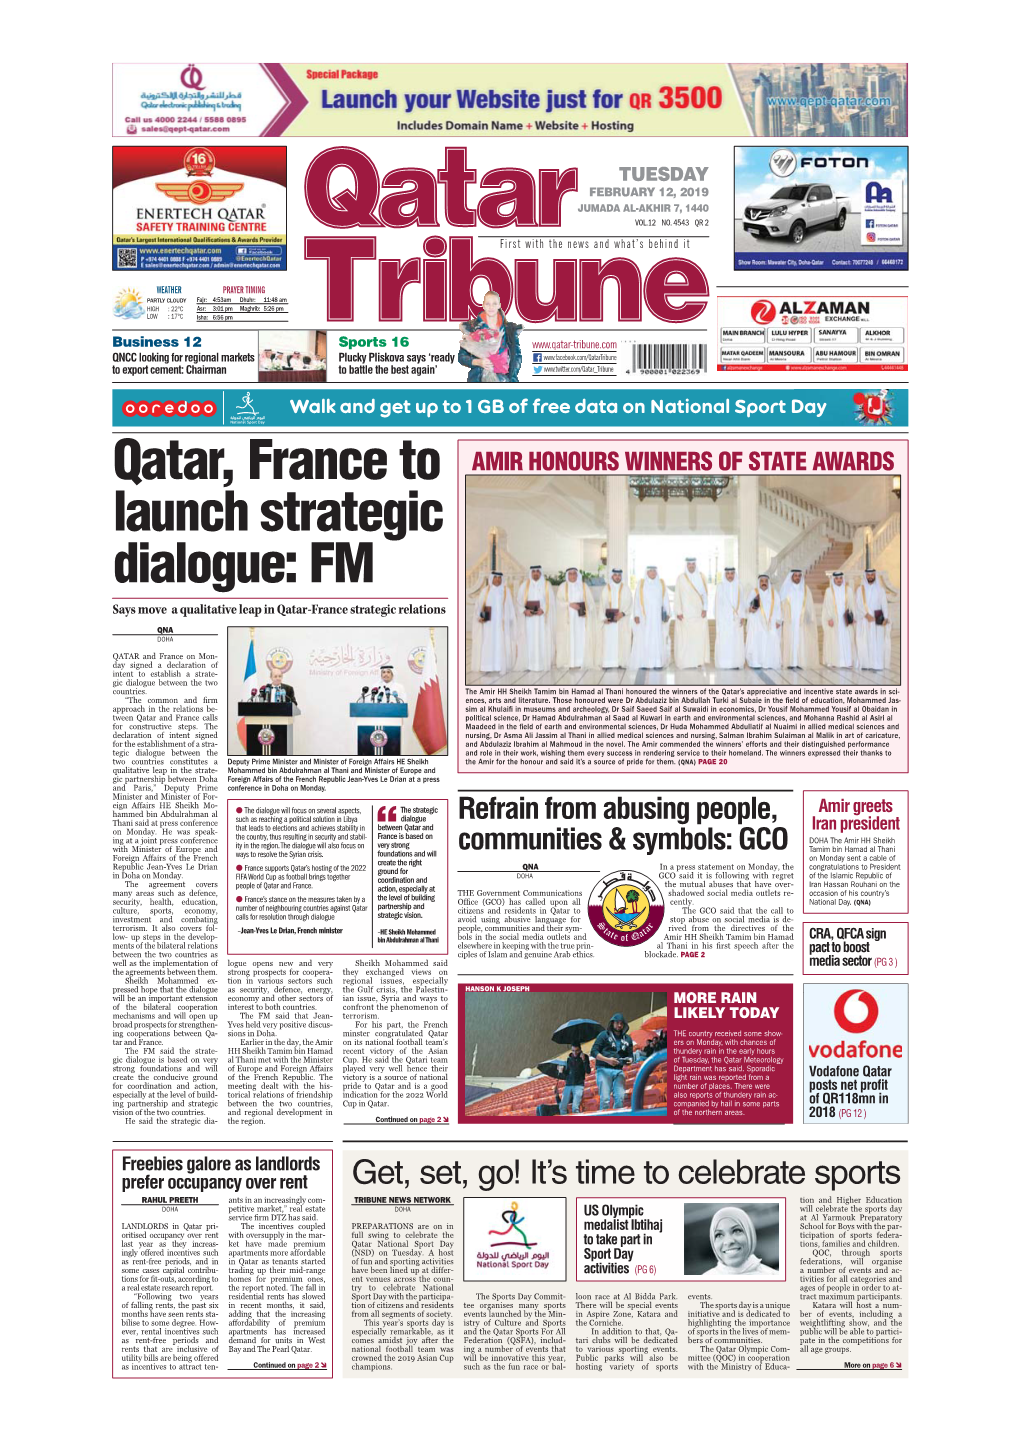 Qatar, France to Launch Strategic Dialogue